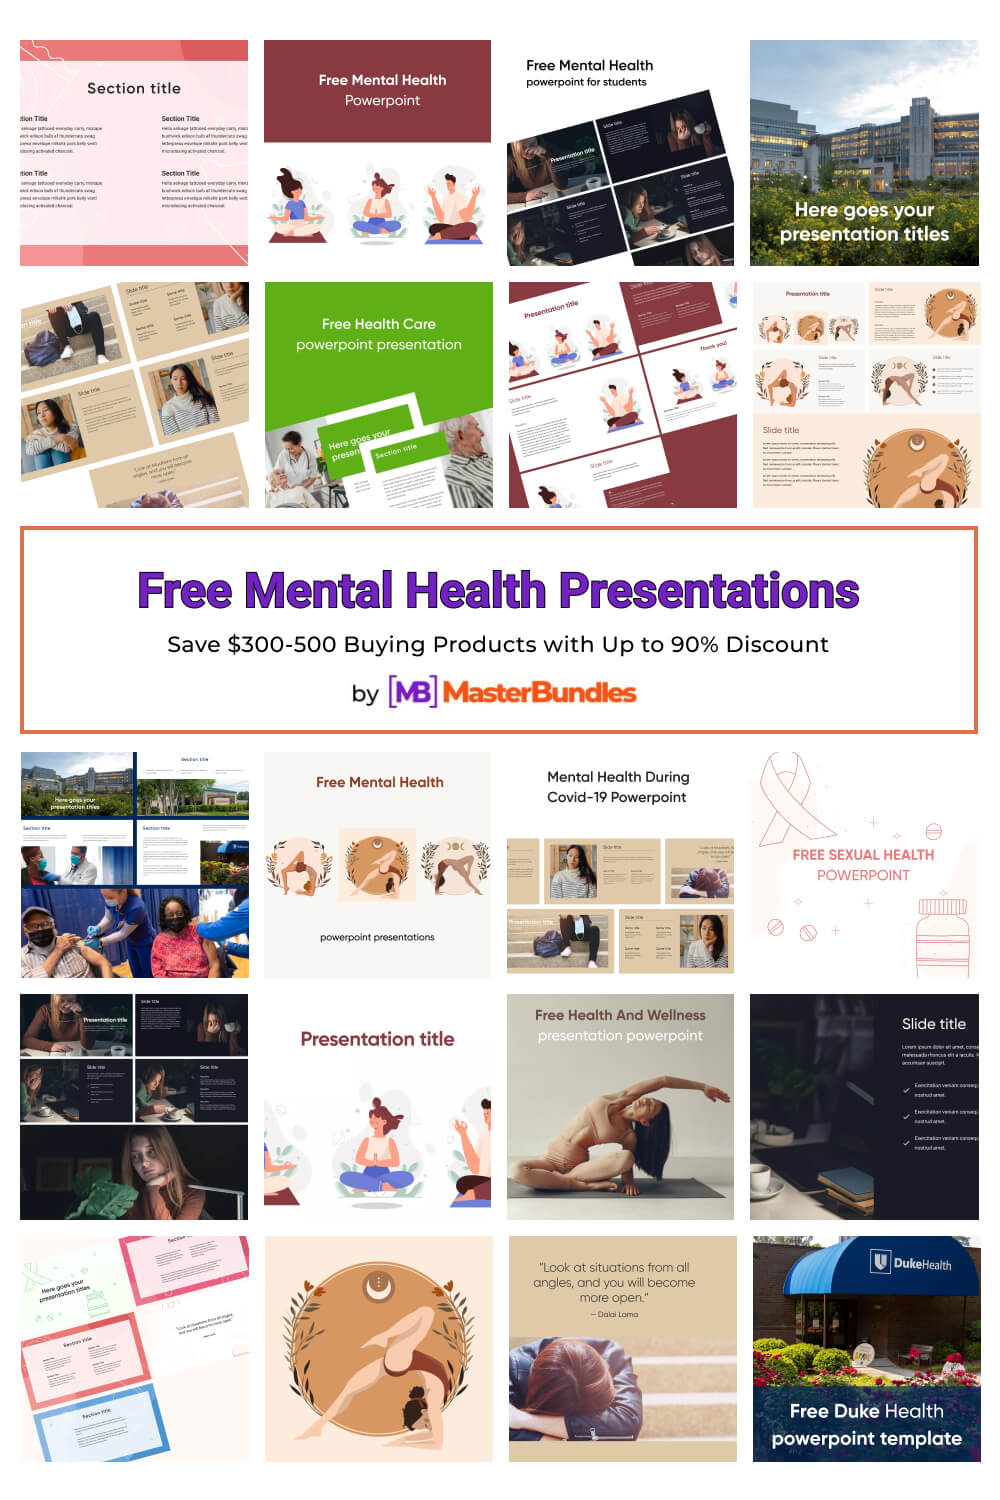 free mental health presentations pinterest image.